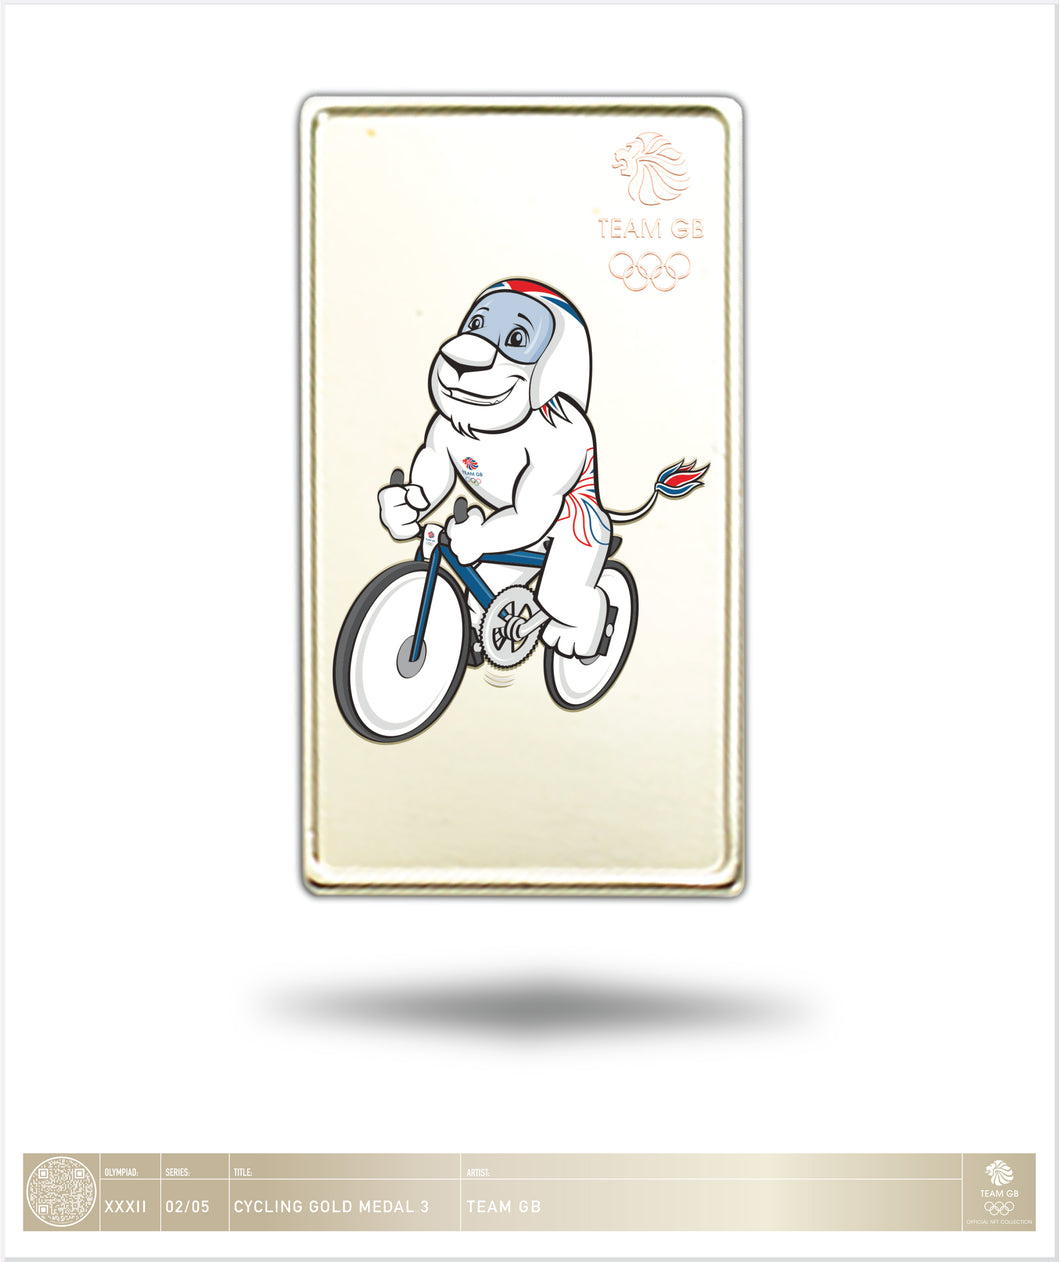 Golden Medal Moment - Charlotte Worthington - Tokyo - BMX FREESTYLE - 01 August 2021 - 2/5